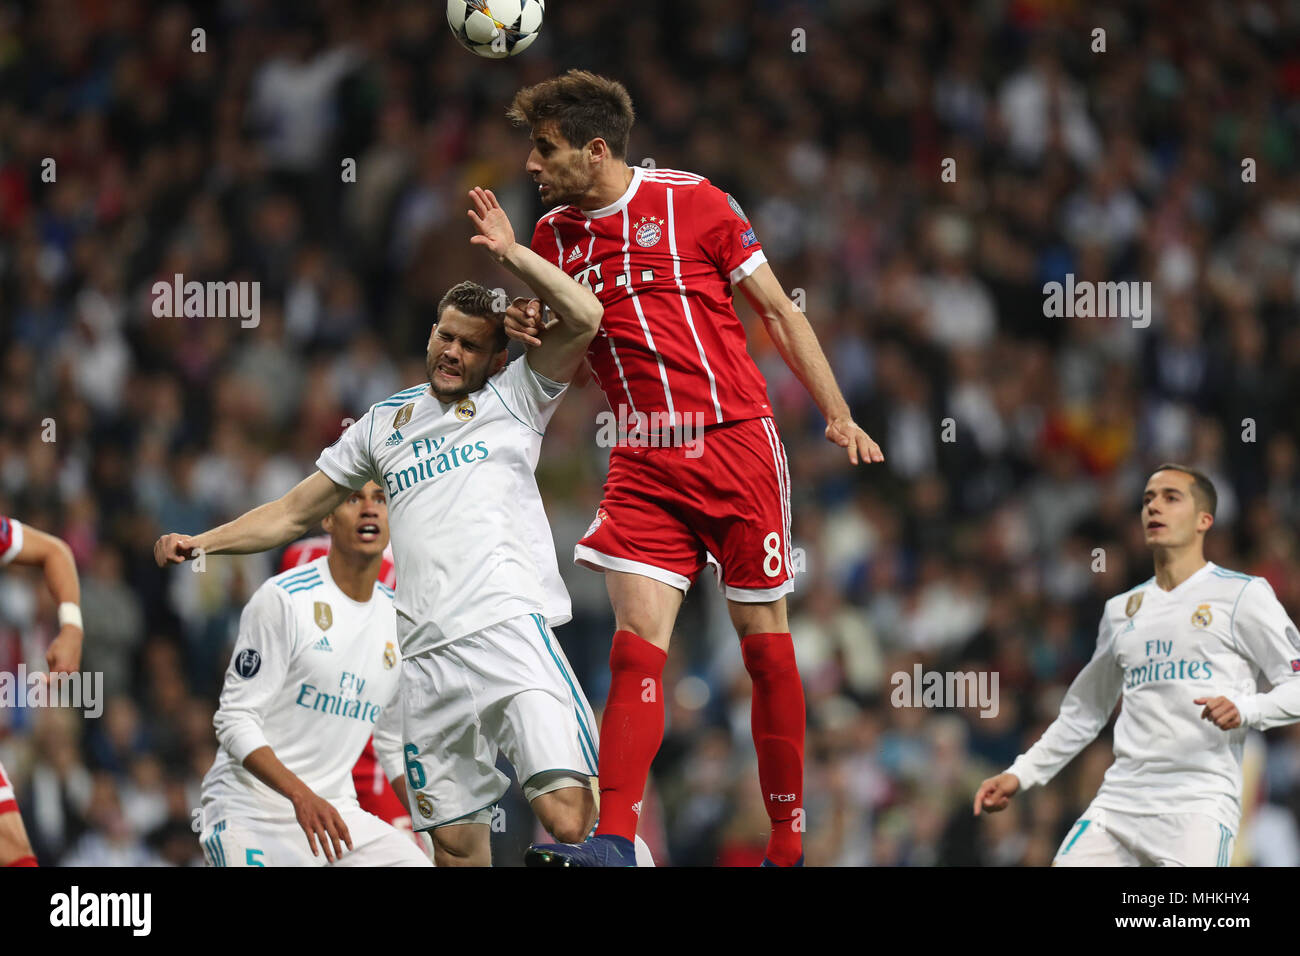 Madrid, Spain. May, JAVI MARTINEZ Bayern Munich heads the ball under pressure from NACHO of Real Madrid during UEFA Champions League, semi final, 2nd leg football match between